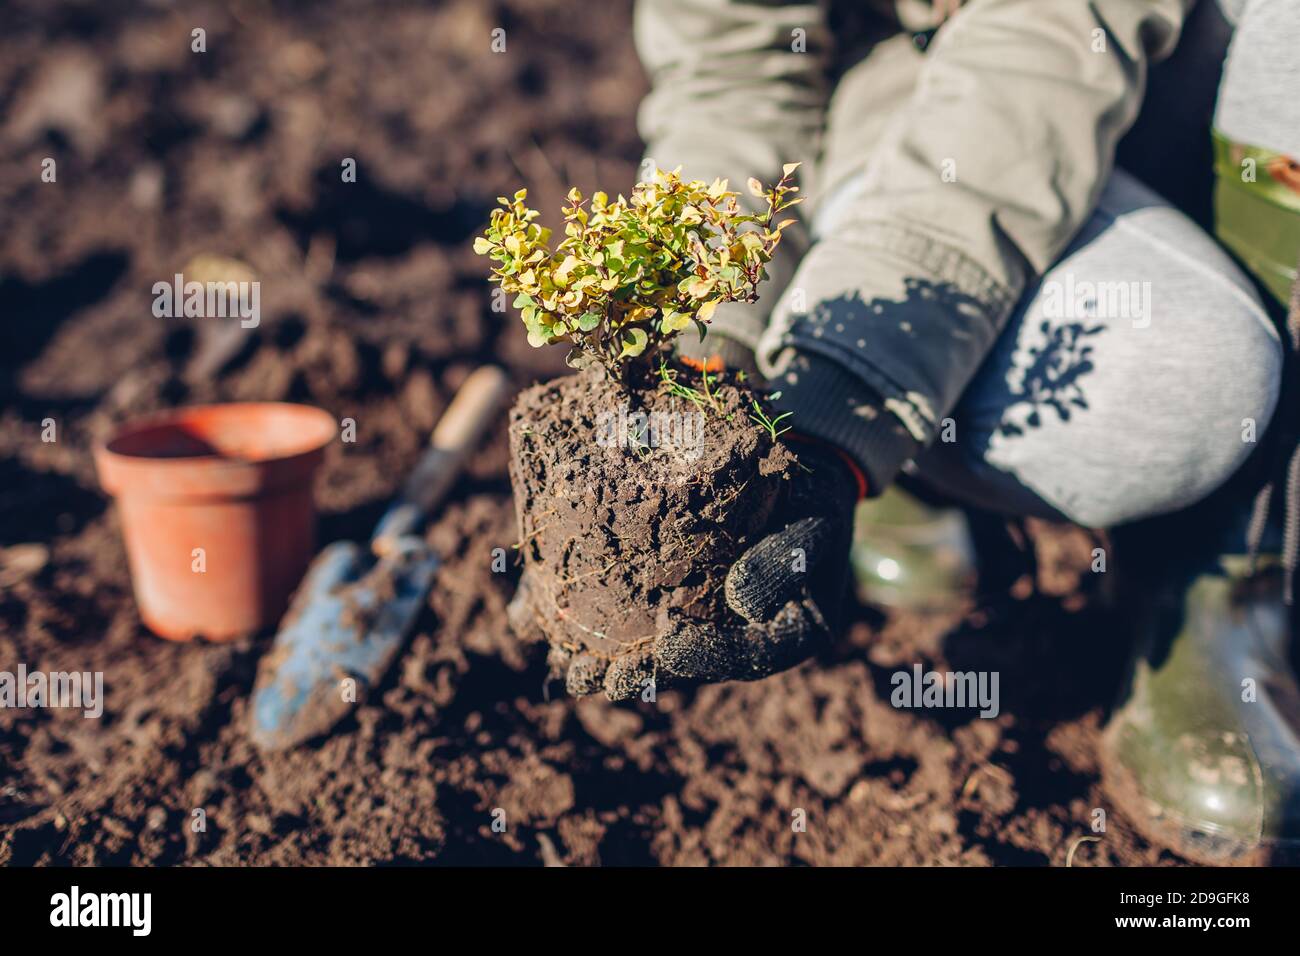 Gärtner umpflanzen Berberbusch aus Behälter in Boden. Gartenarbeit im Herbst. Thunbergs gelbe Berberitze Stockfoto